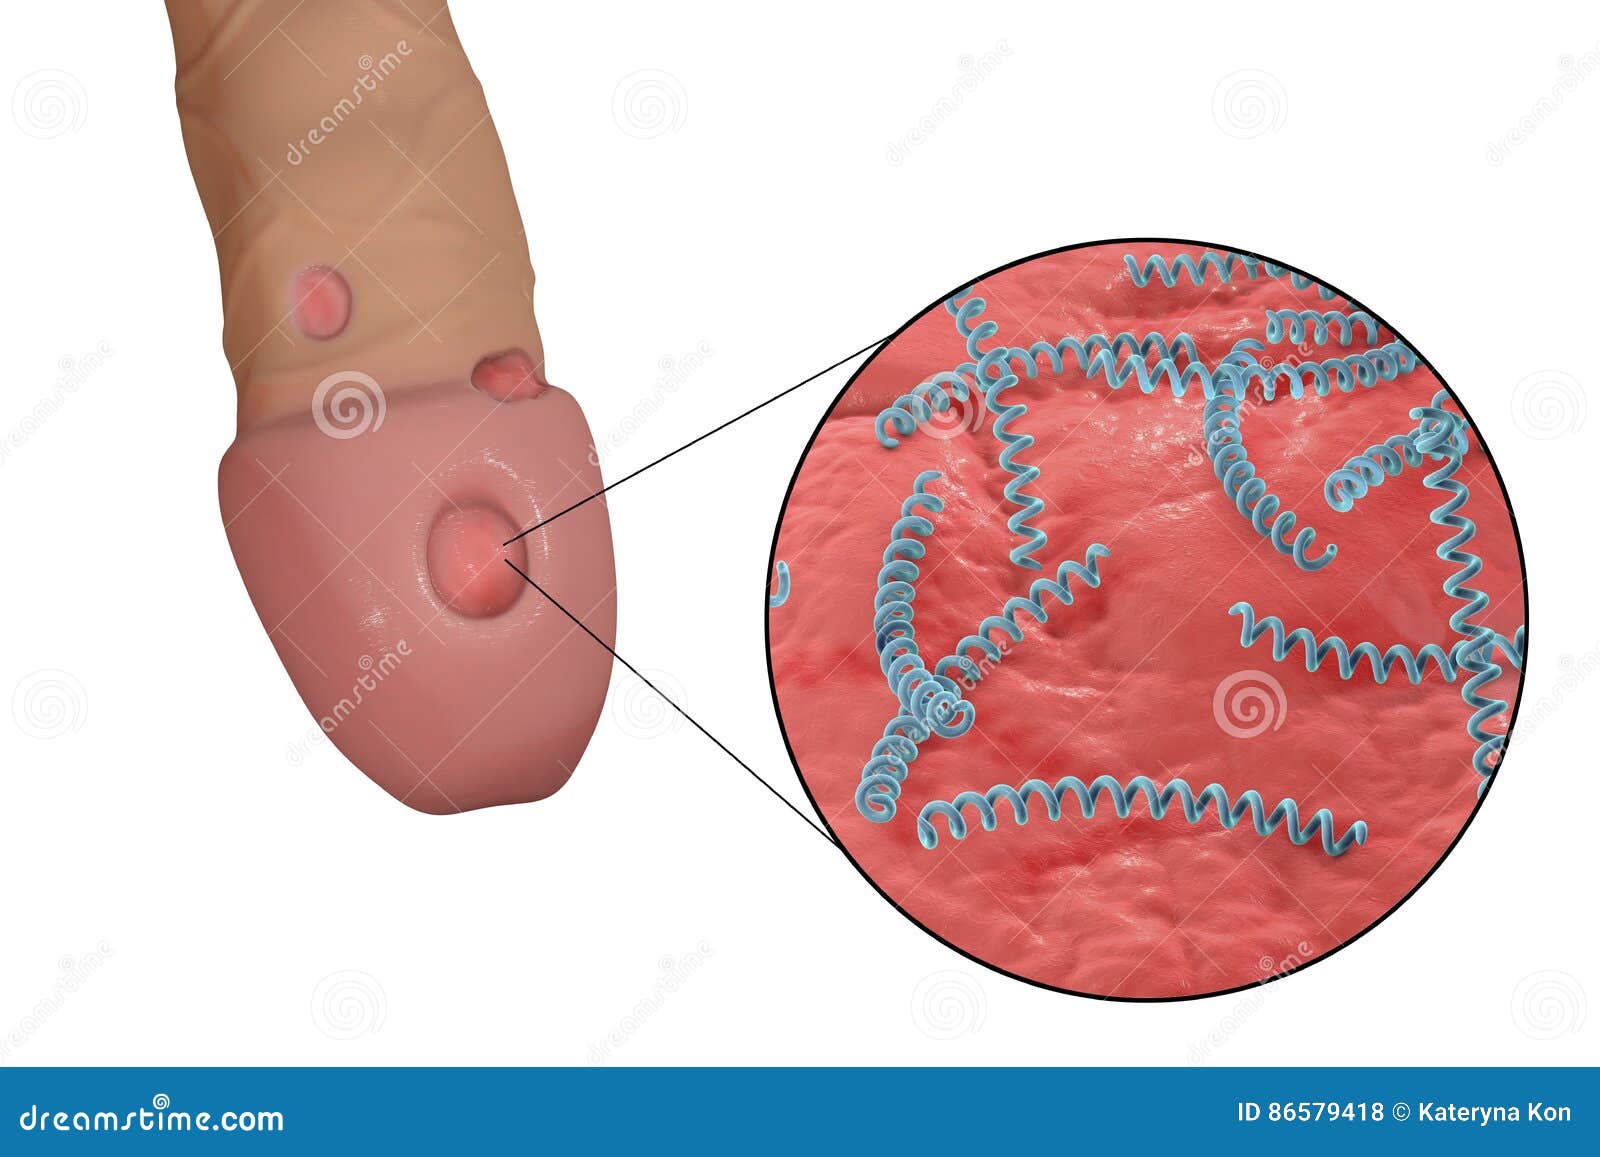 Syphilitic Ulcer And Bacteria Treponema Pallidum Stock Illustration - Illus...